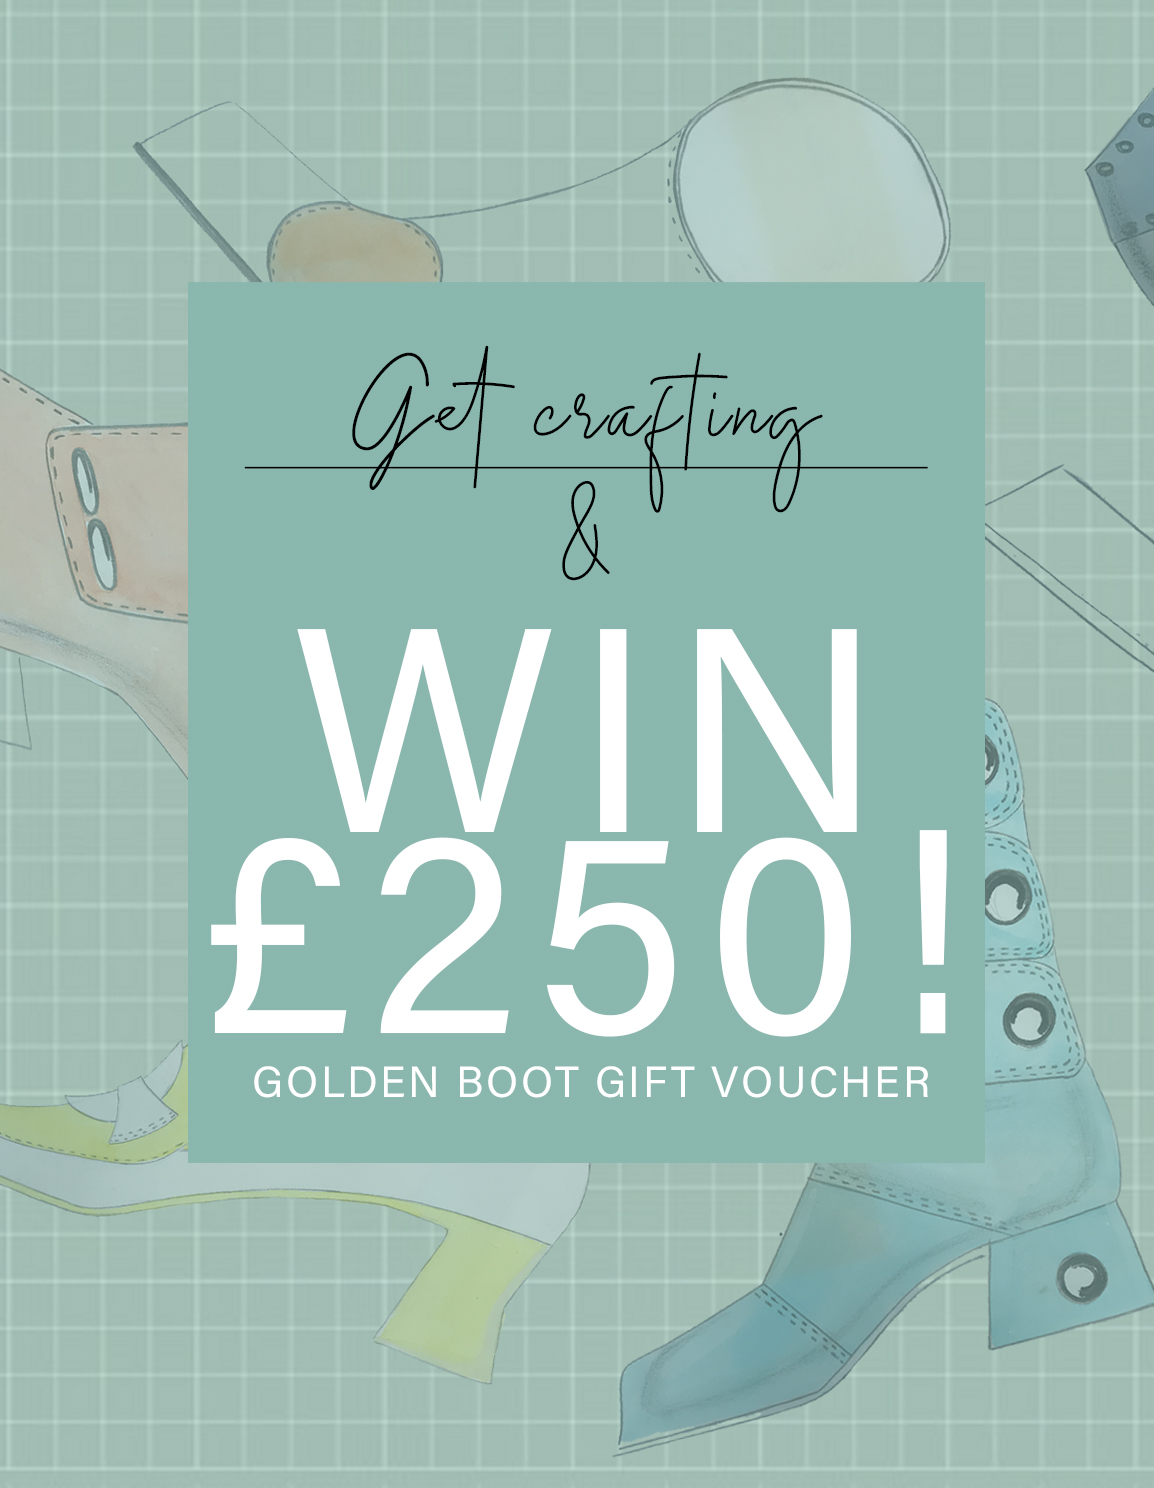 Get crafting & WIN £250 Golden Boot Voucher!!